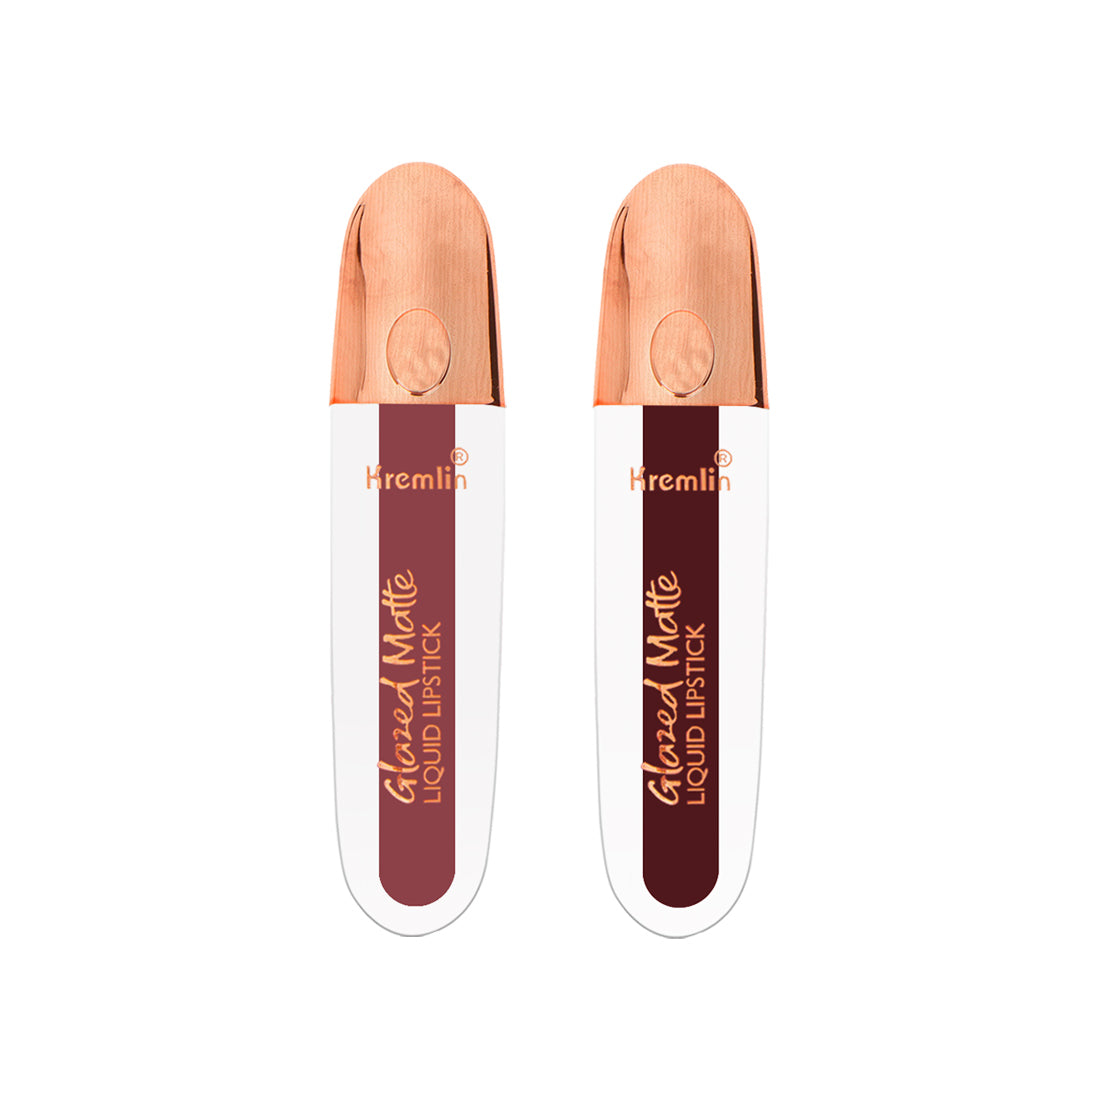 Kremlin Glazed Matte Liquid Lipstick Lips Pack of 2 (Virgin, Wicked)